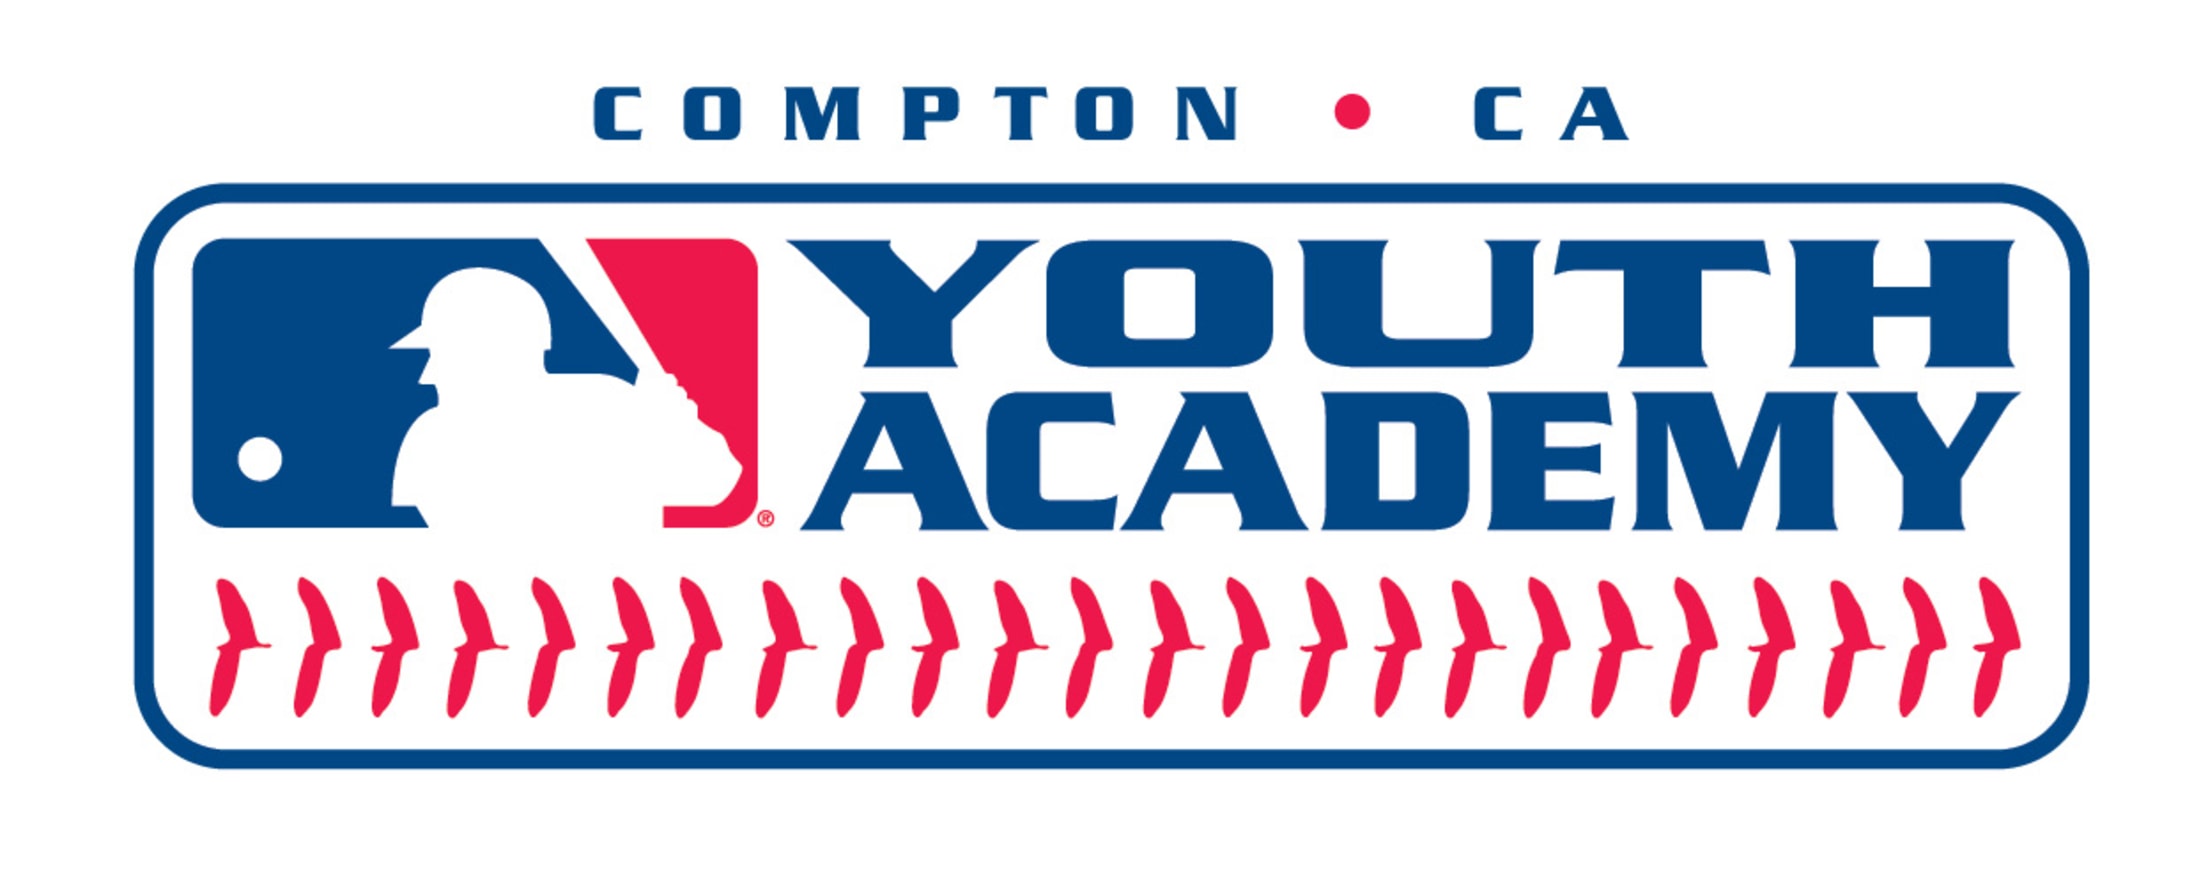 MLB umpire Malachi Moore a trailblazer from Compton Youth Academy